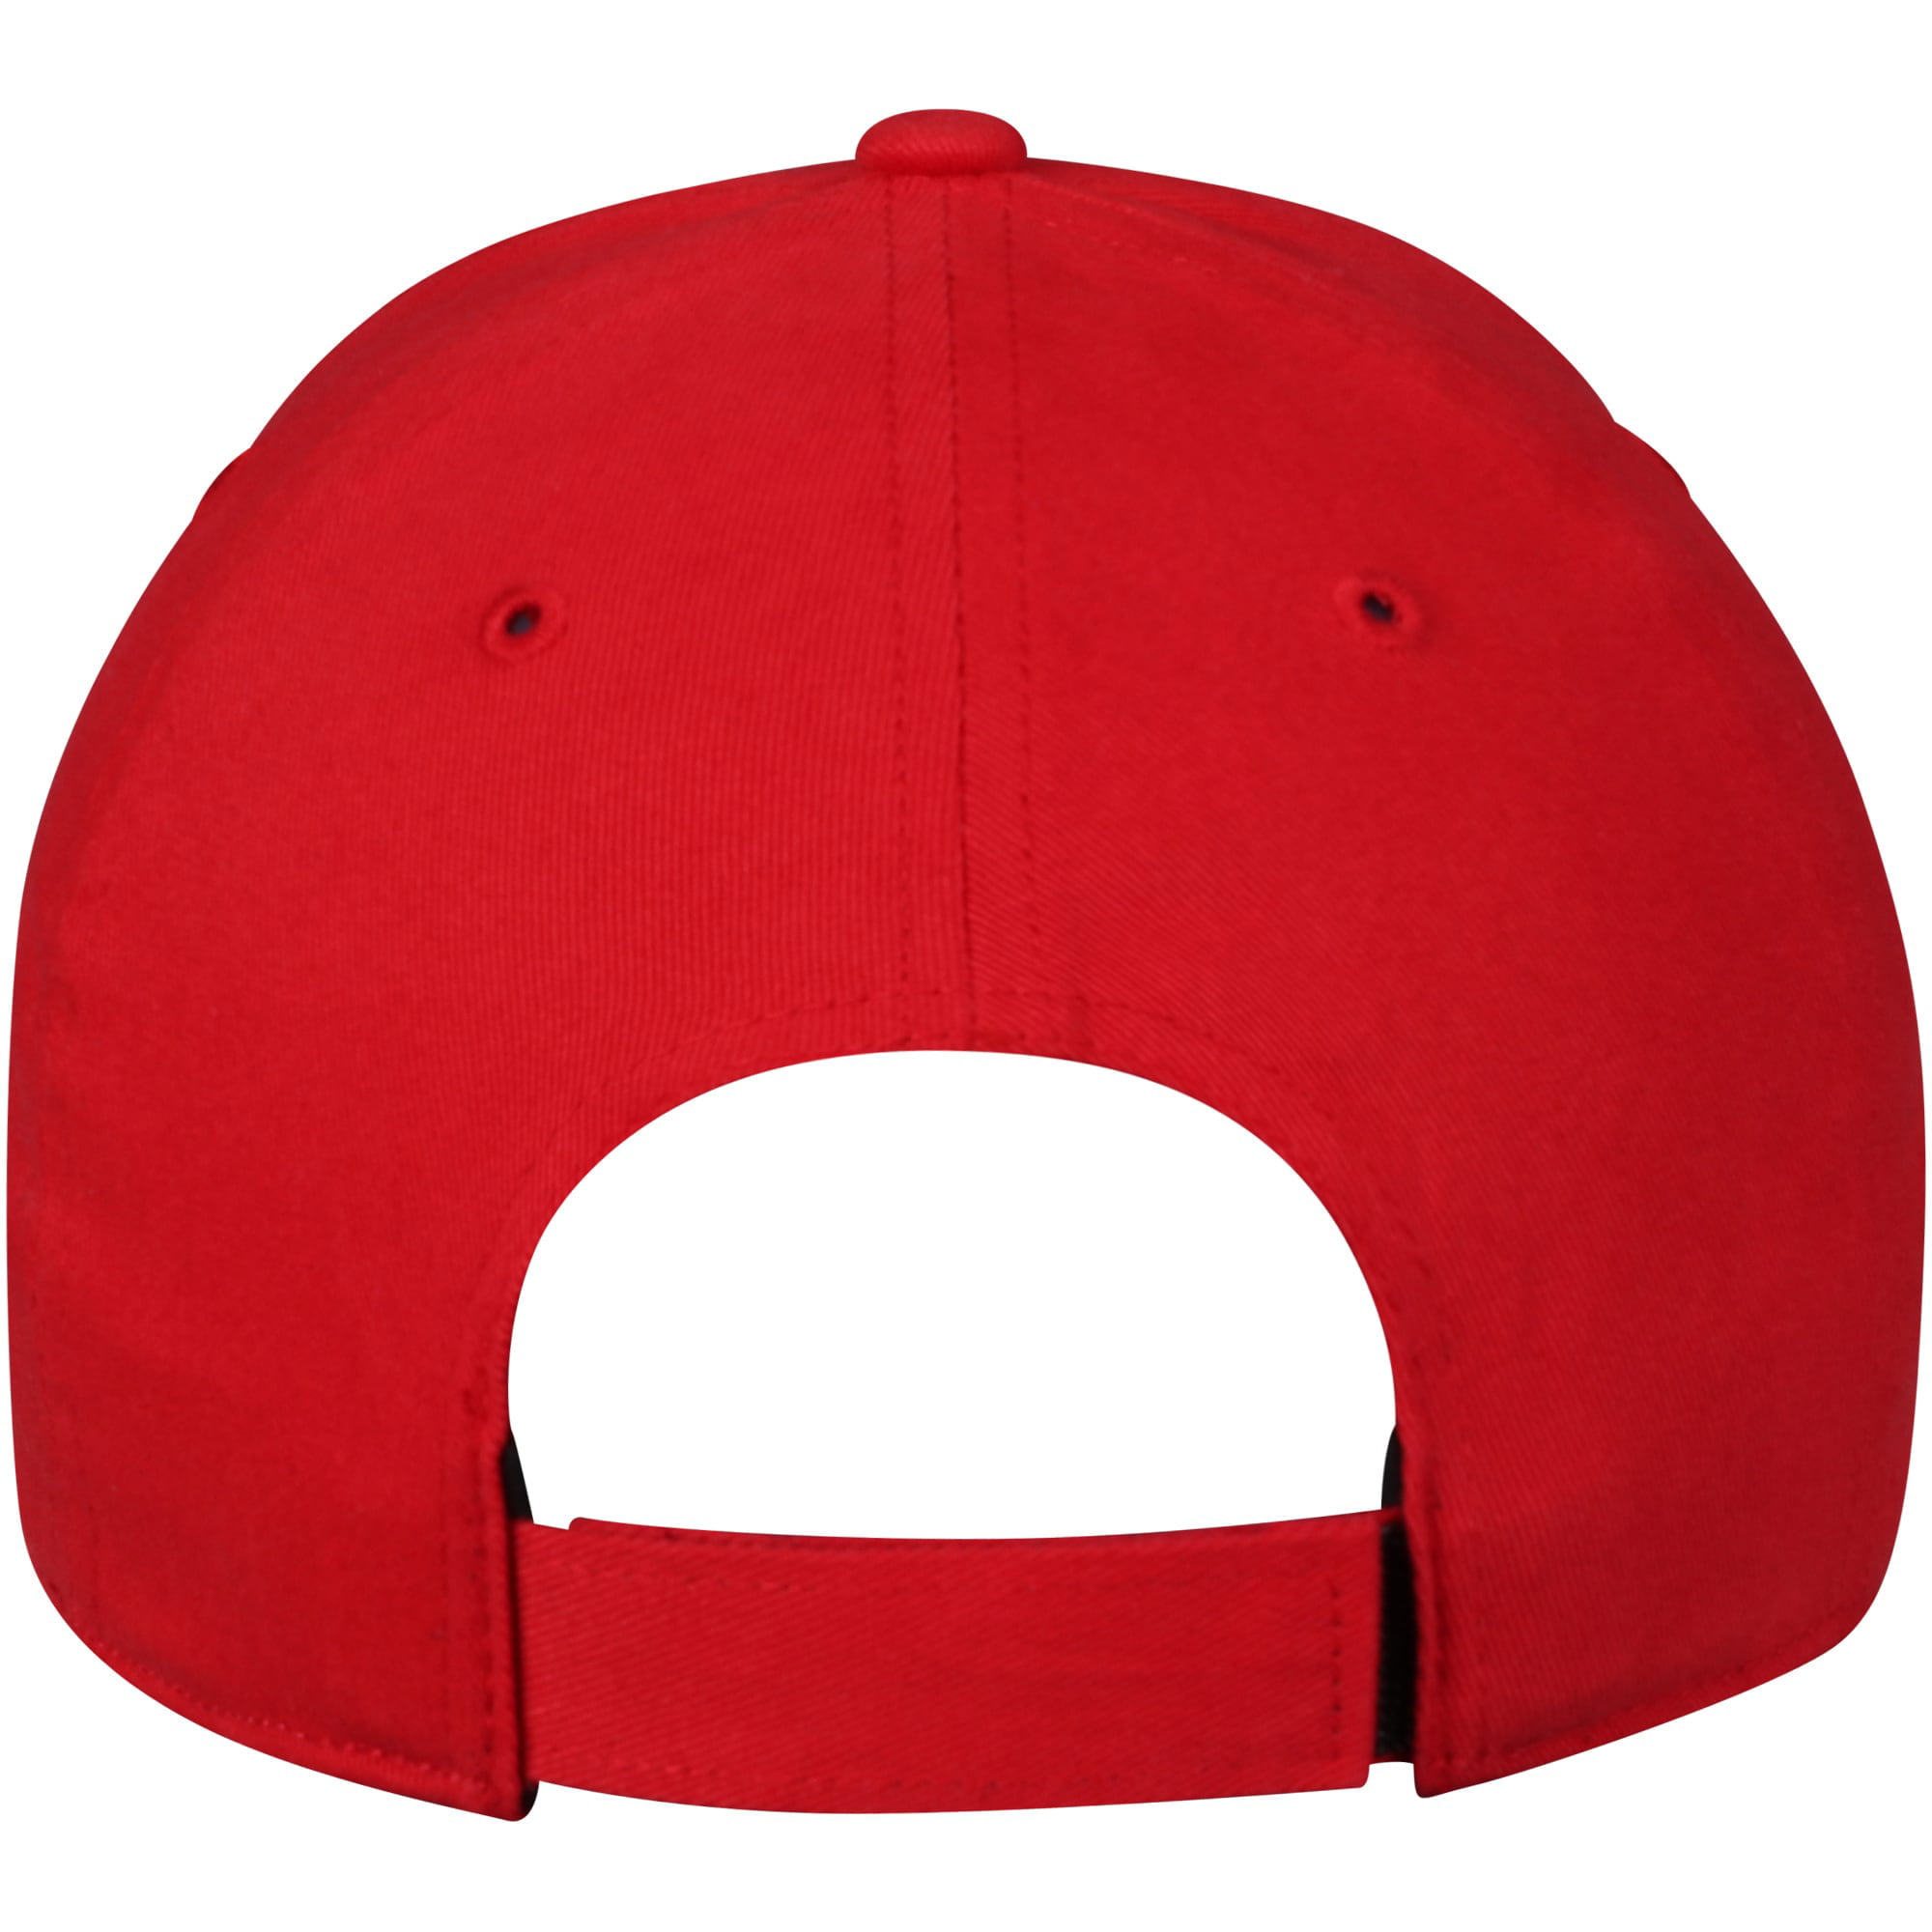 KIDS St. Louis Cardinals Swarovski Crystal Hat 